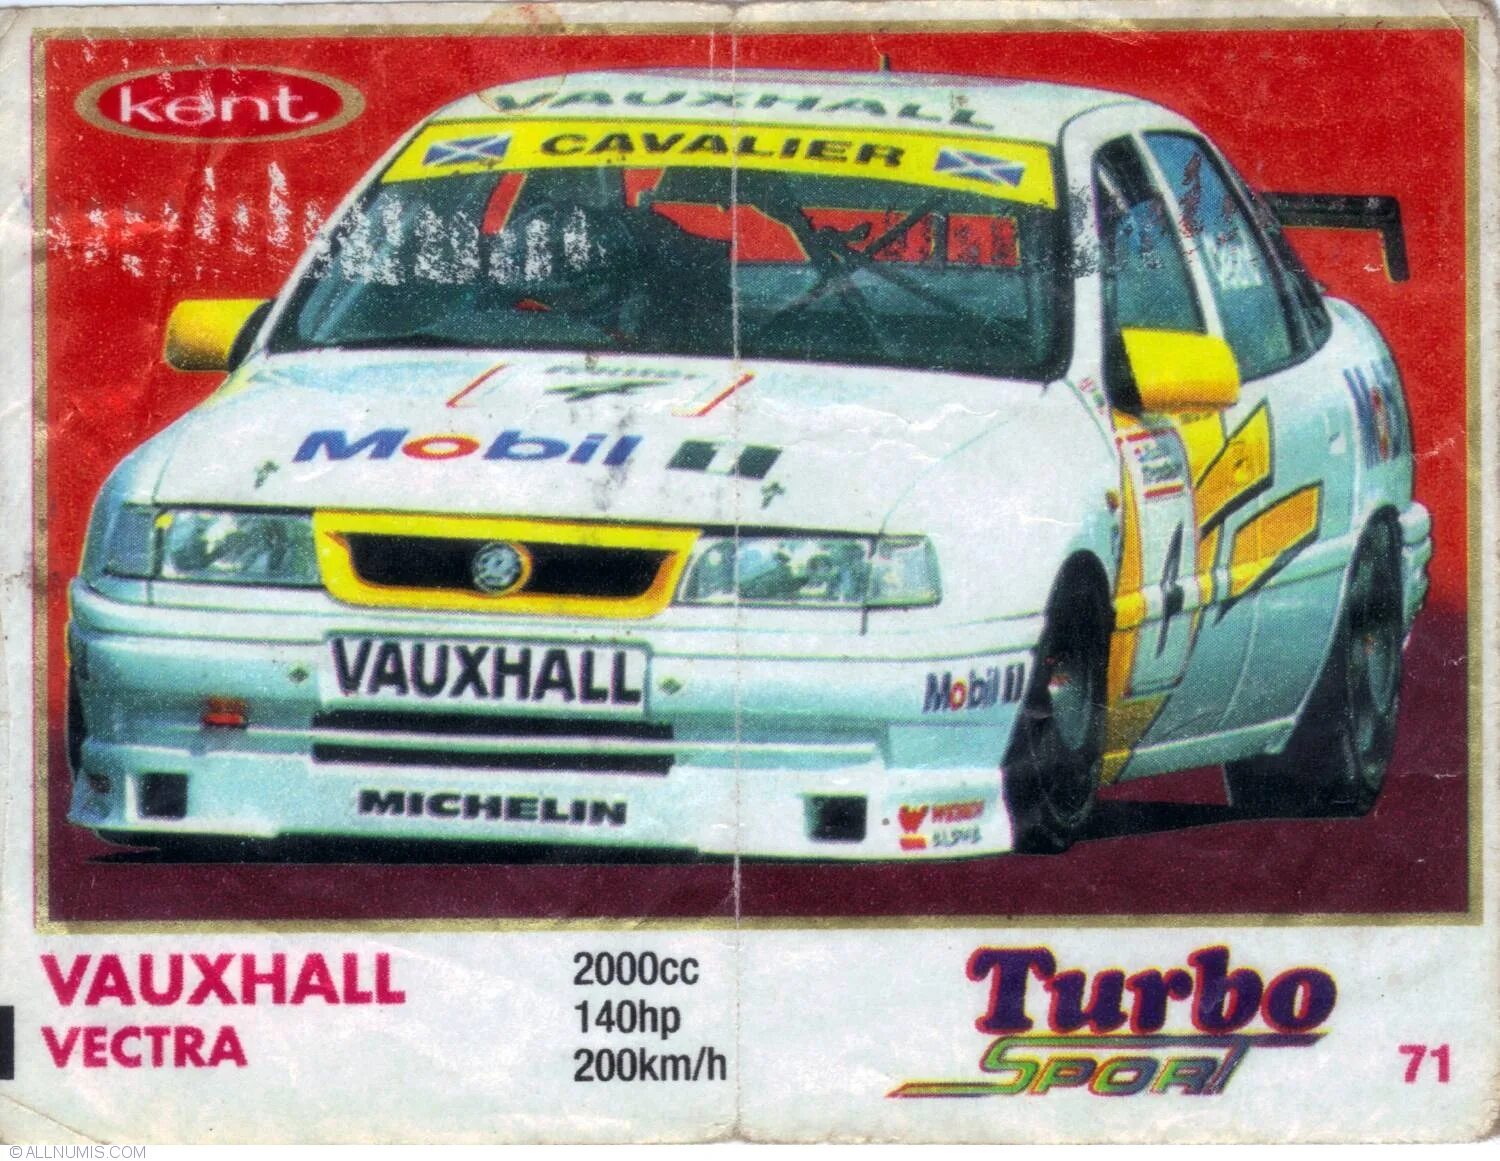 Turbo Sport 471-540. Turbo Sport № 471. Вкладыши турбо спорт Кент. Вкладыши Turbo 2000.